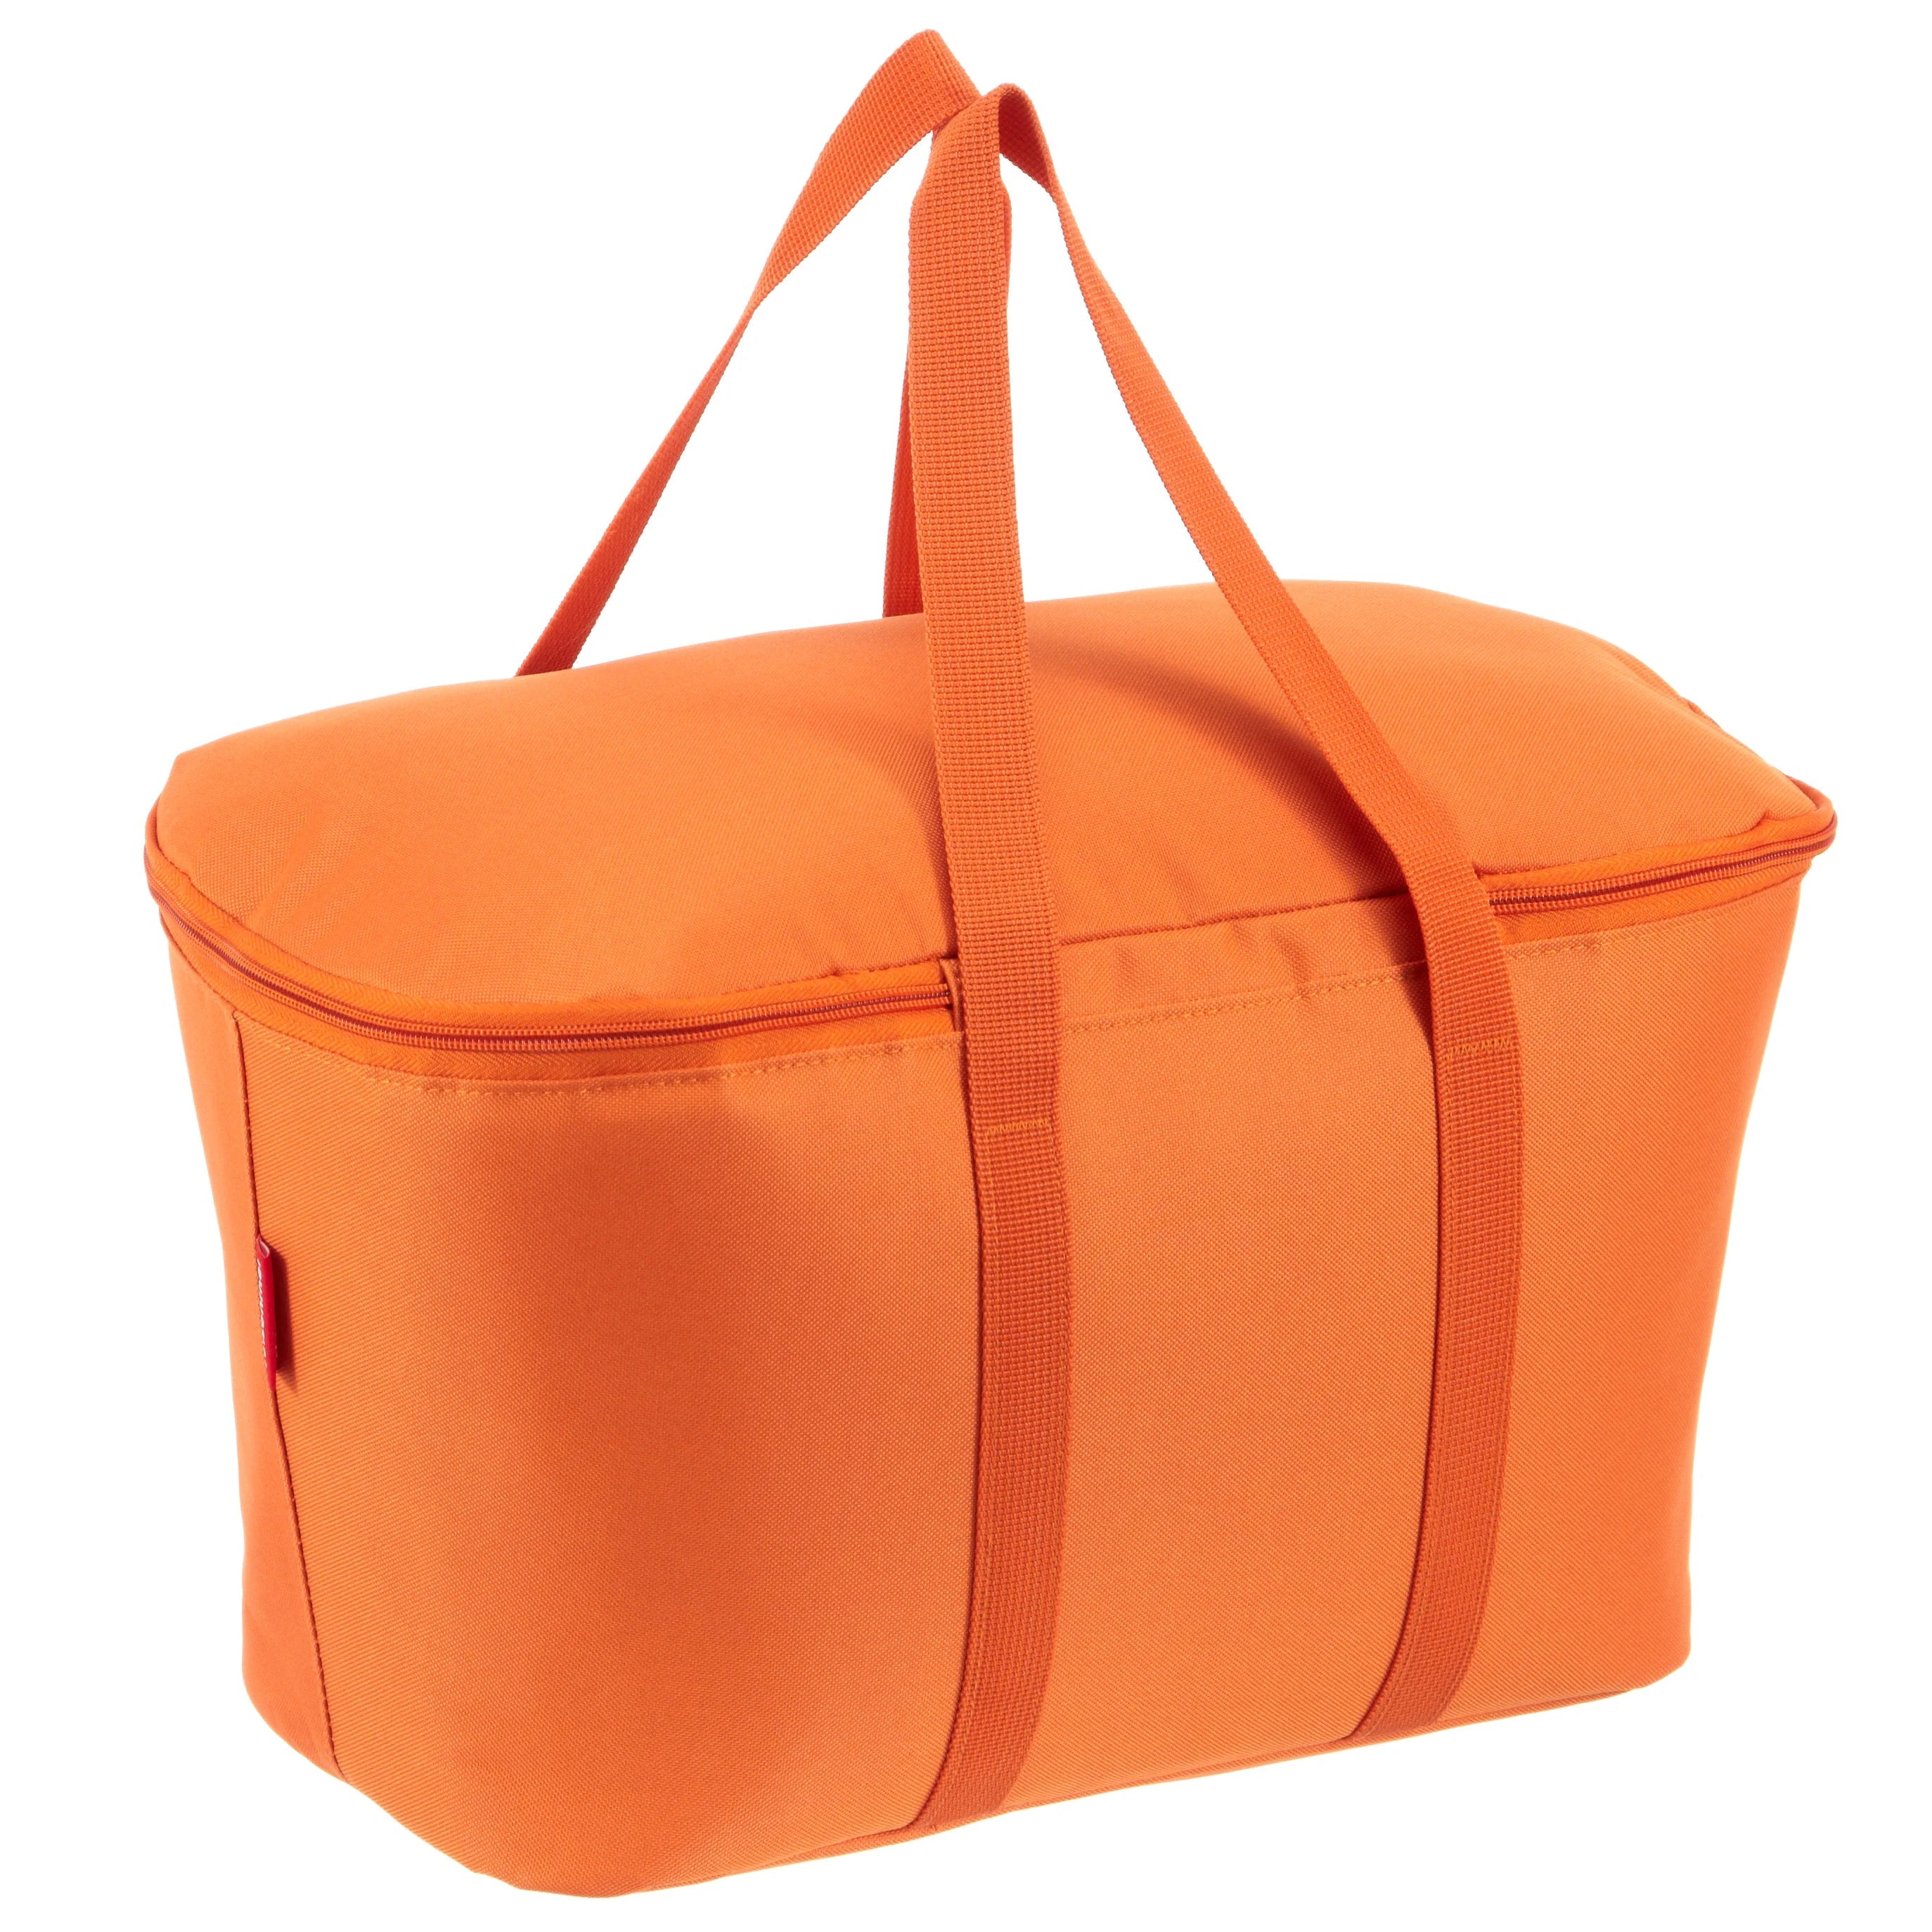 Reisenthel Shopping Coolerbag cooler bag 44 cm - Pineapple